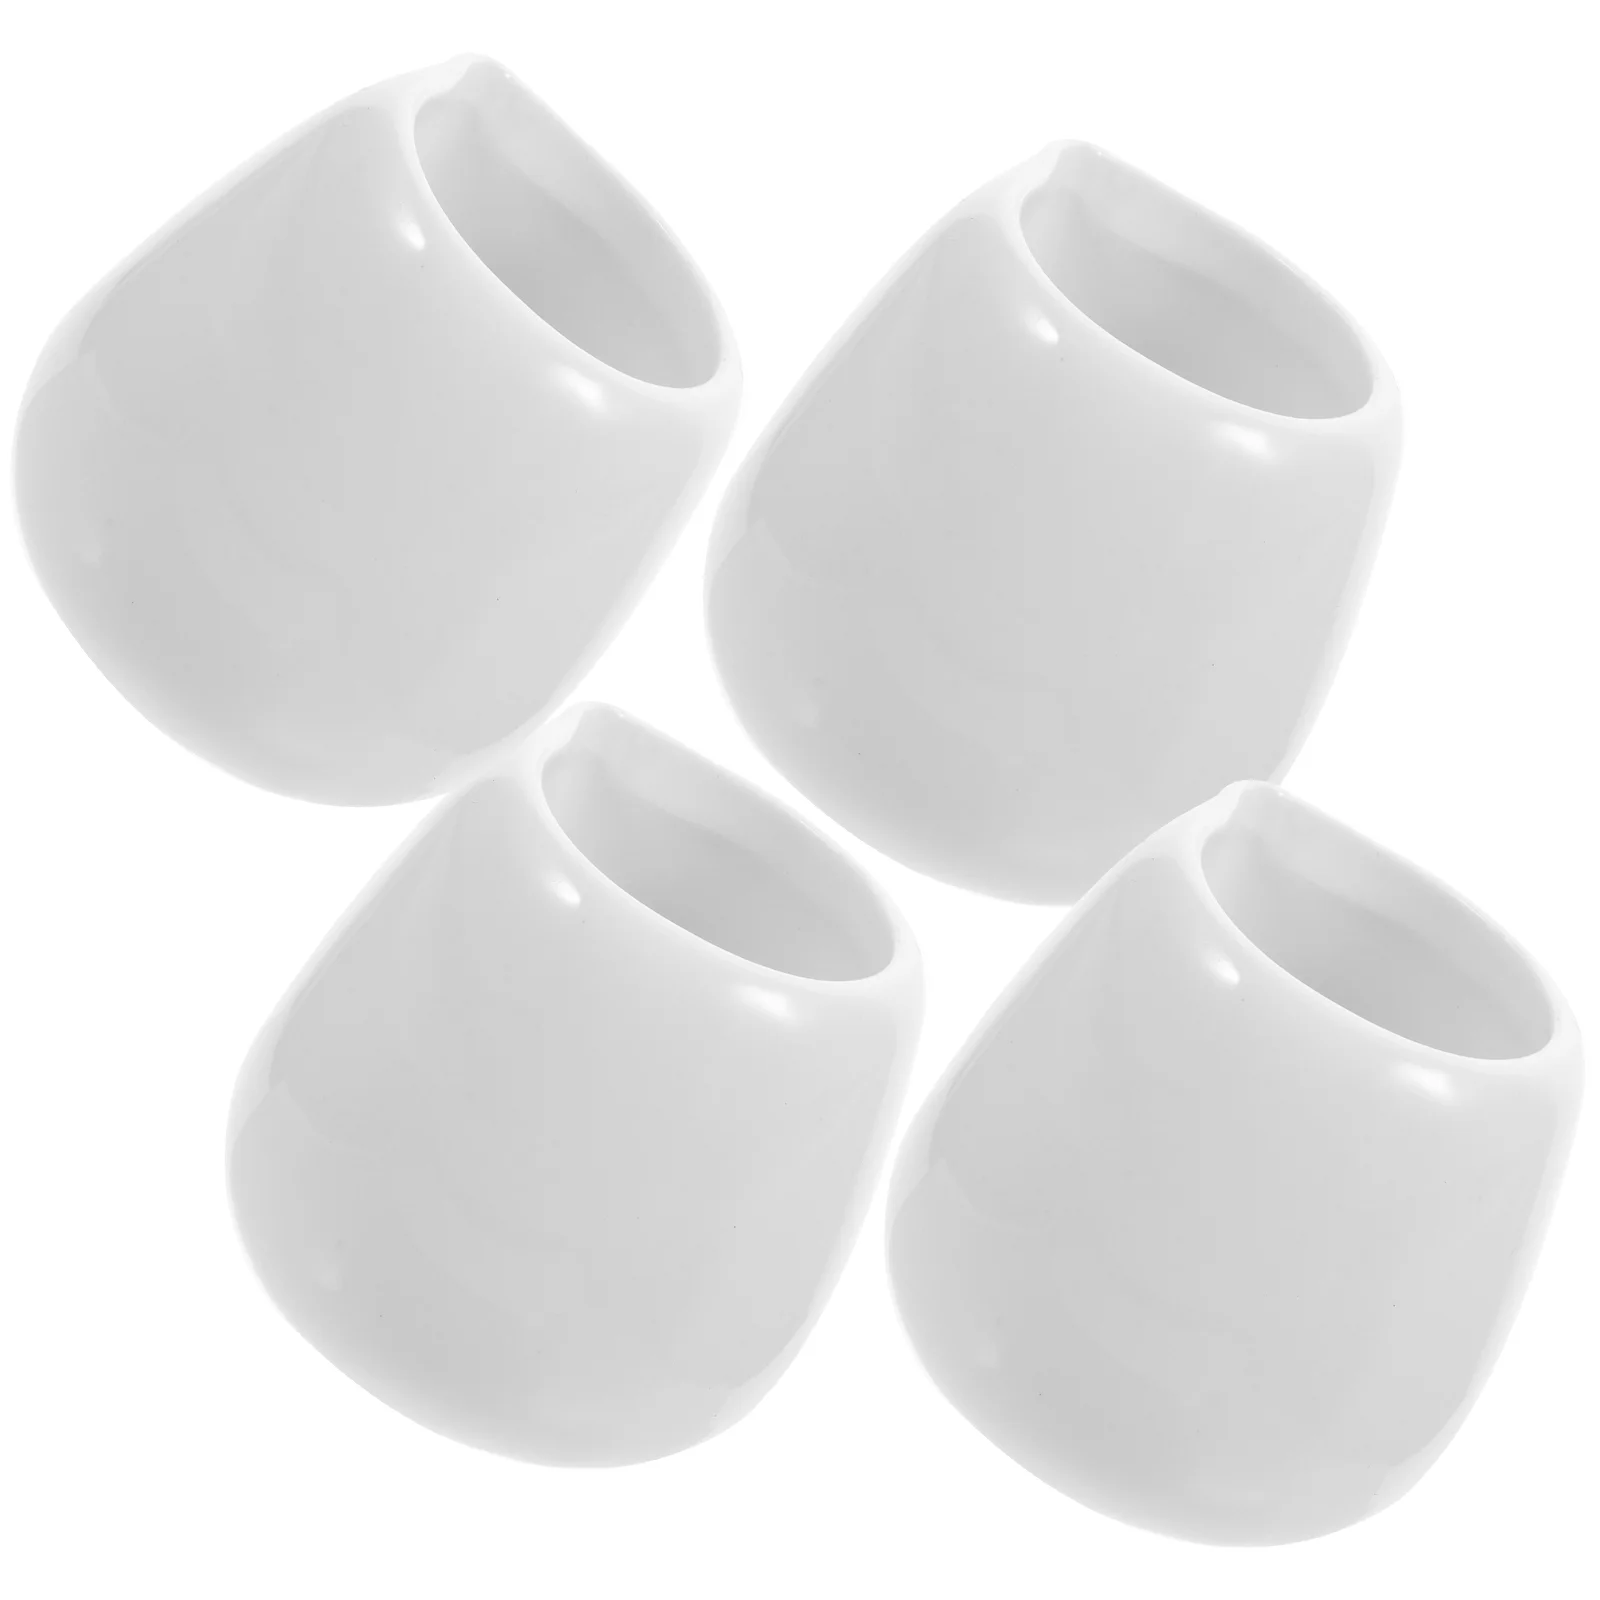 

4 Pcs Ceramic Milk Cup Concentrate Containers Sauce Boat White Gravy Pitchers Condiment Bowl Ceramics Serving Boats